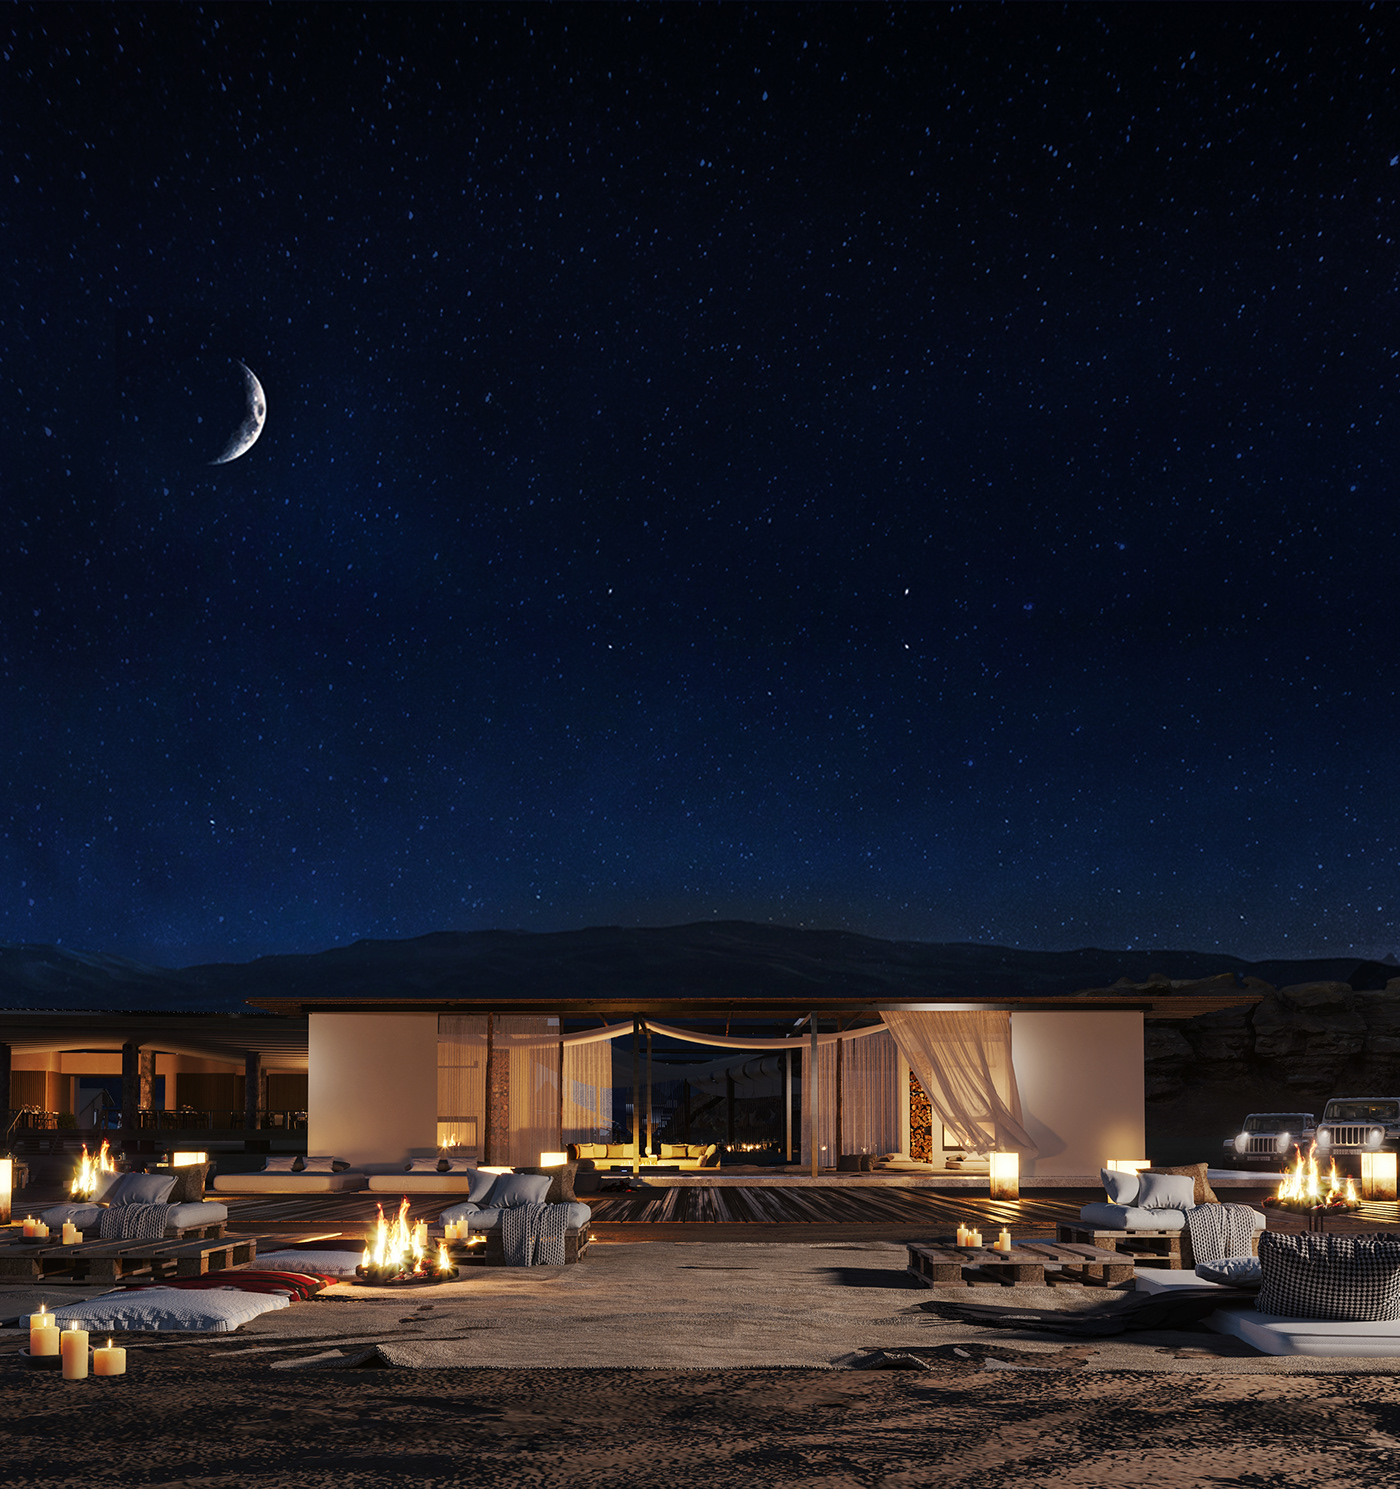 3dsmax architecture camp corona desert desertarchitecture desertlandscape rendering urbandesign visualization